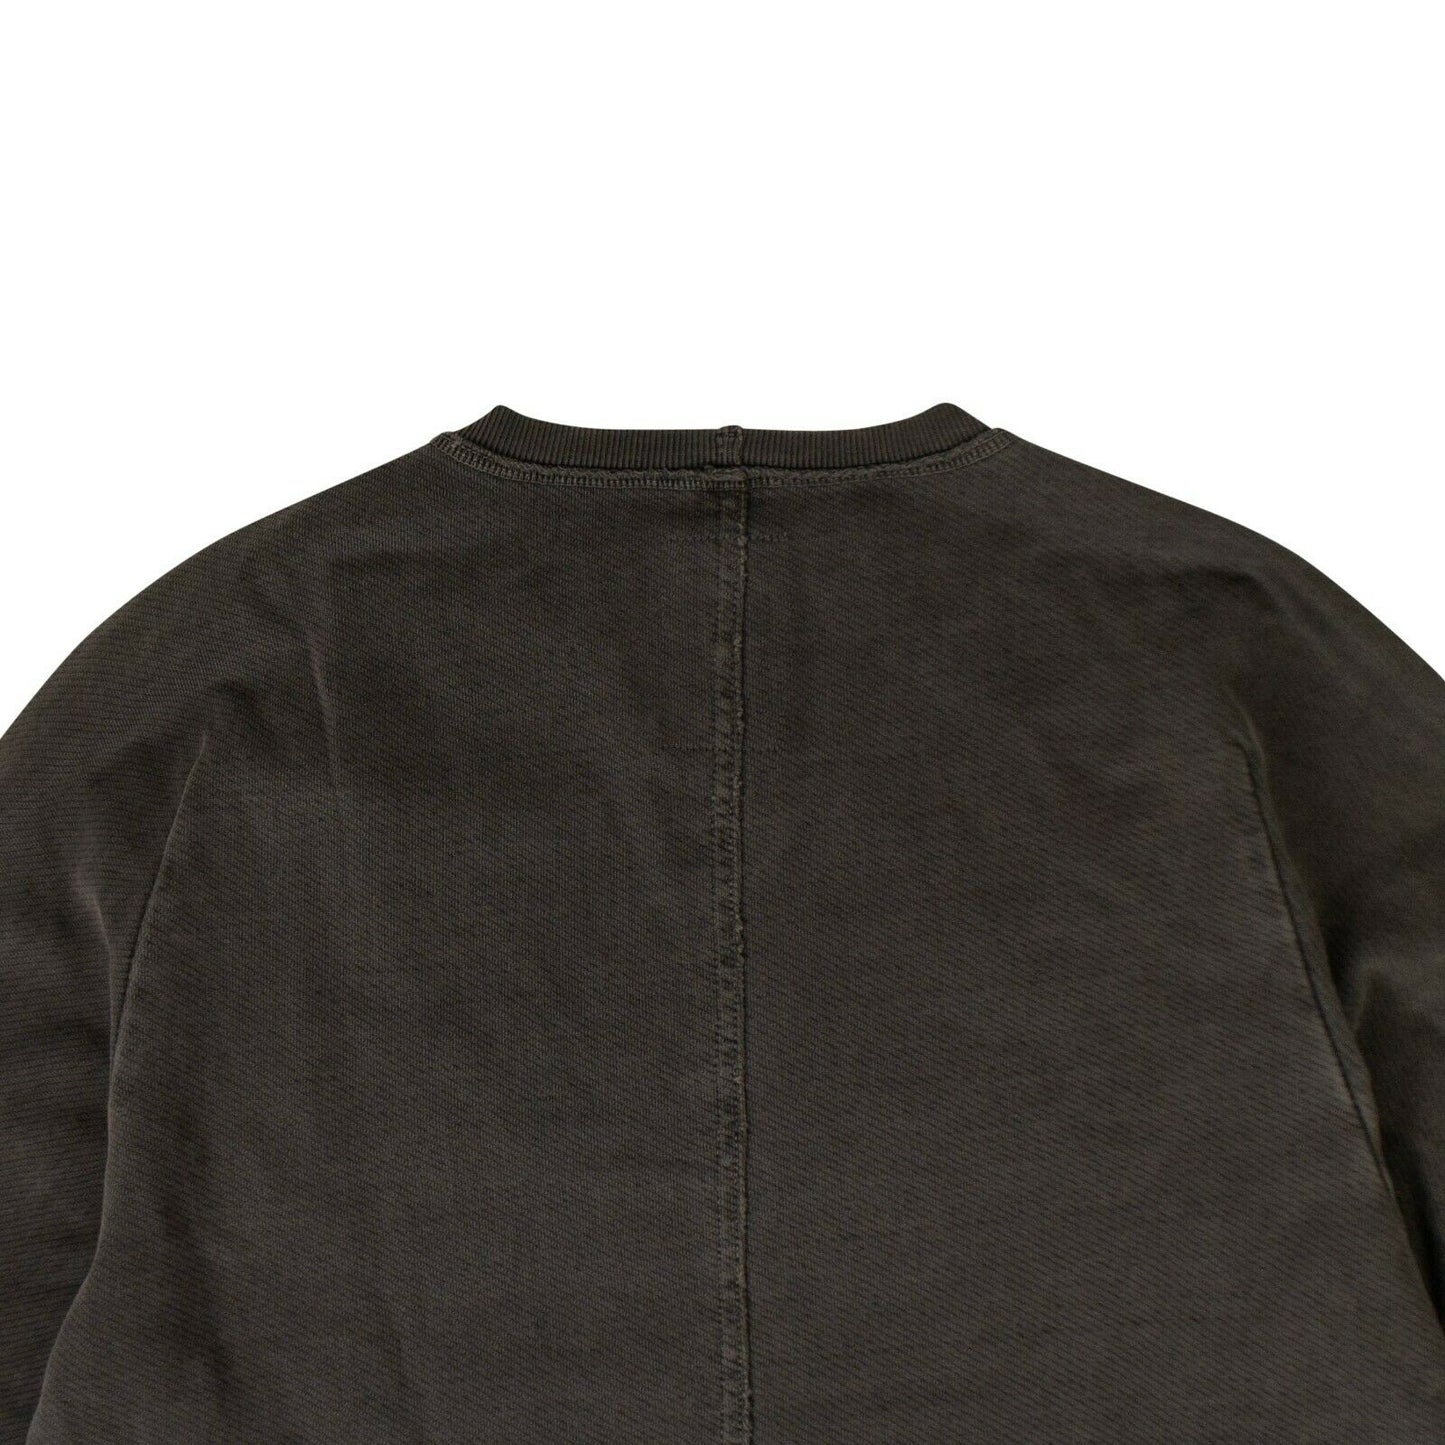 Maharishi Organic Cotton Boro Crew Sweater - Black